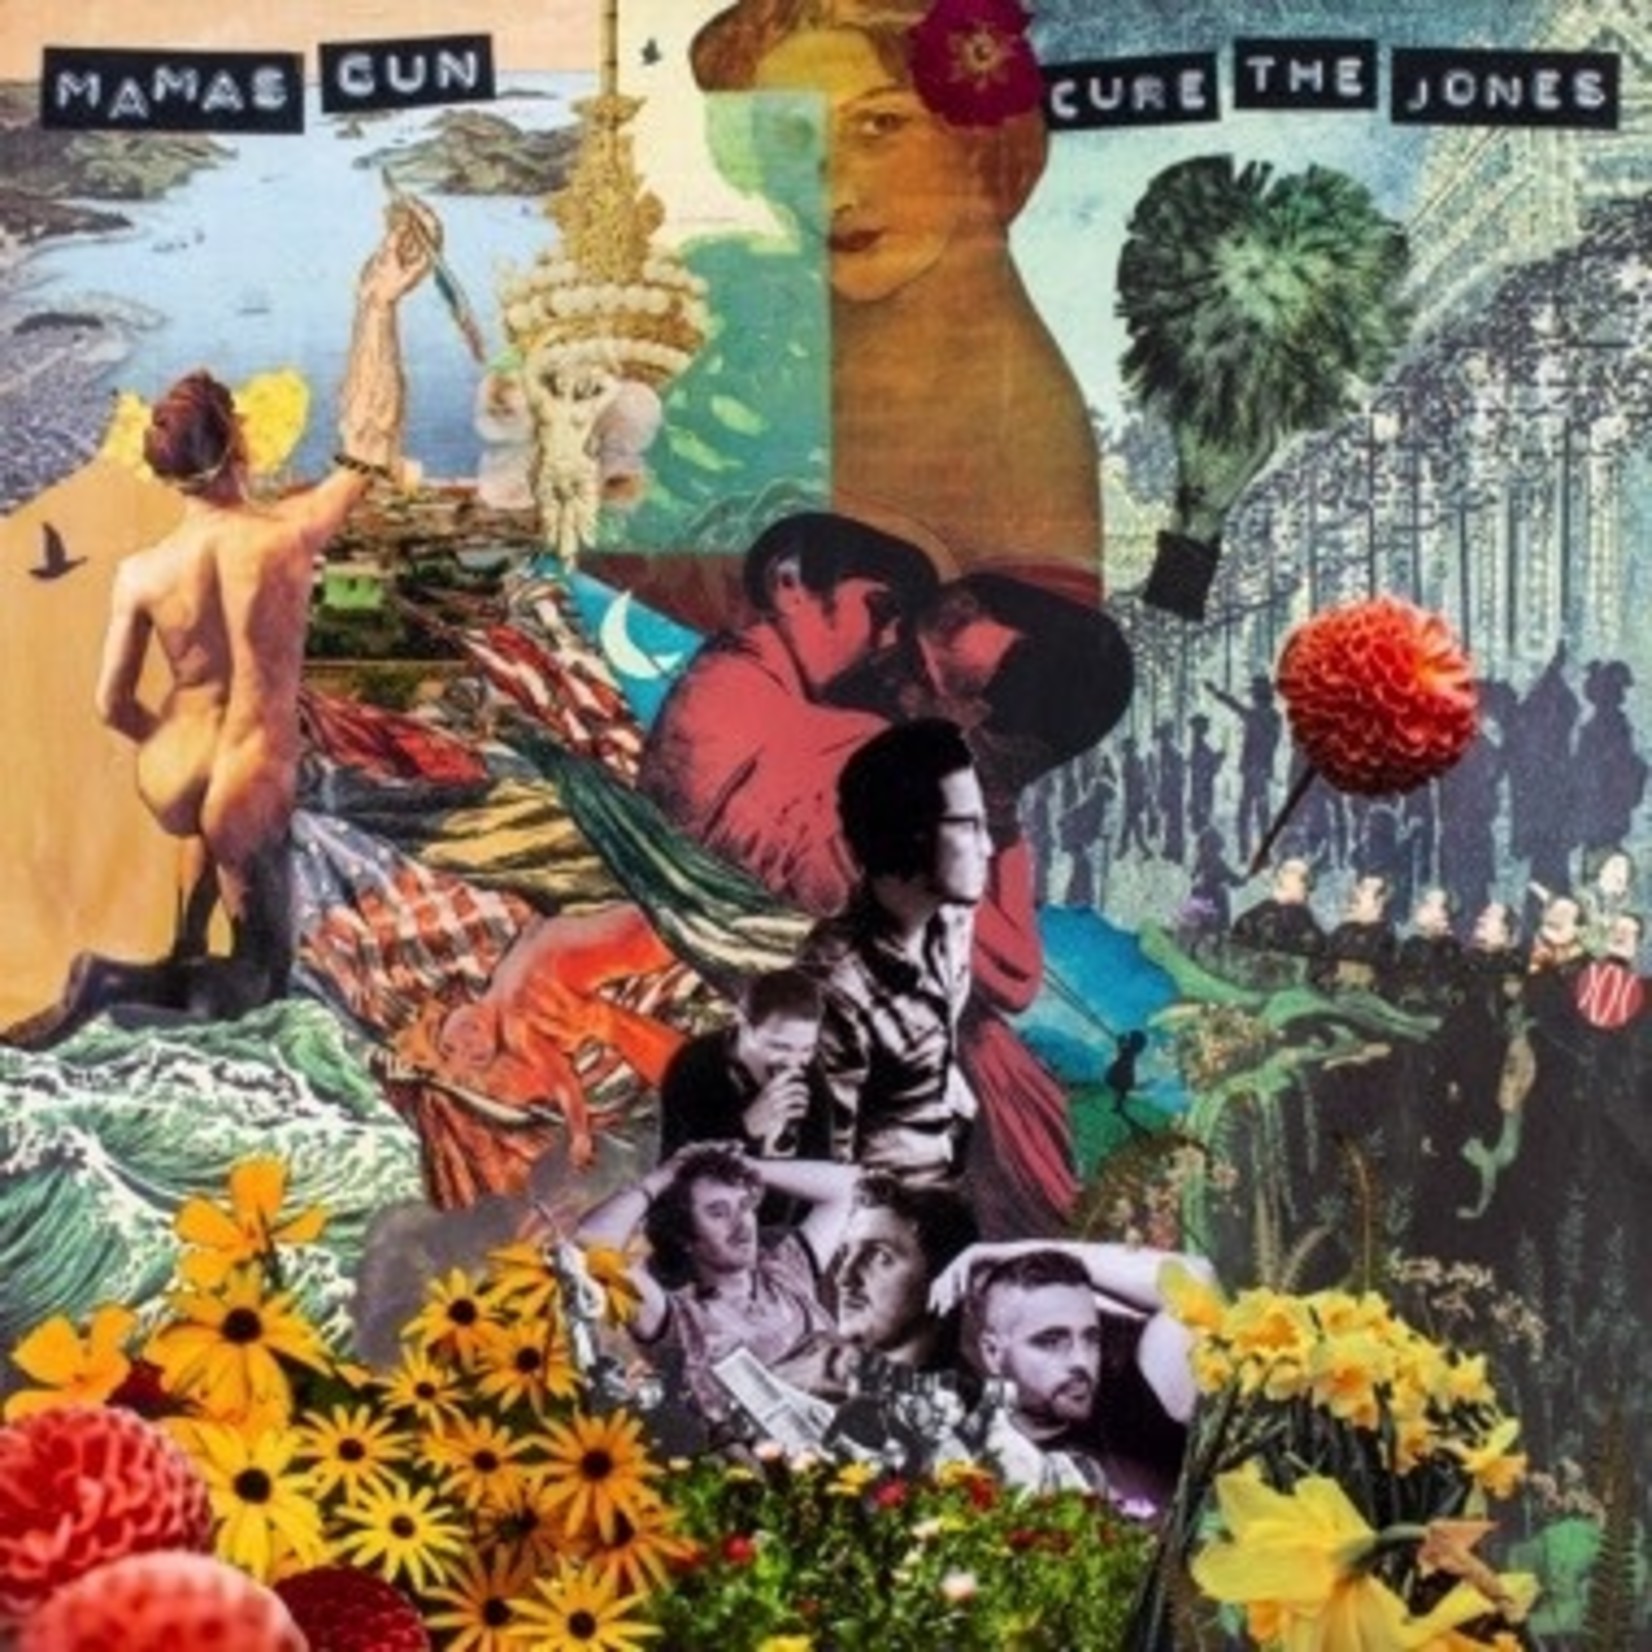 Colemine Mamas Gun - Cure the Jones (LP)